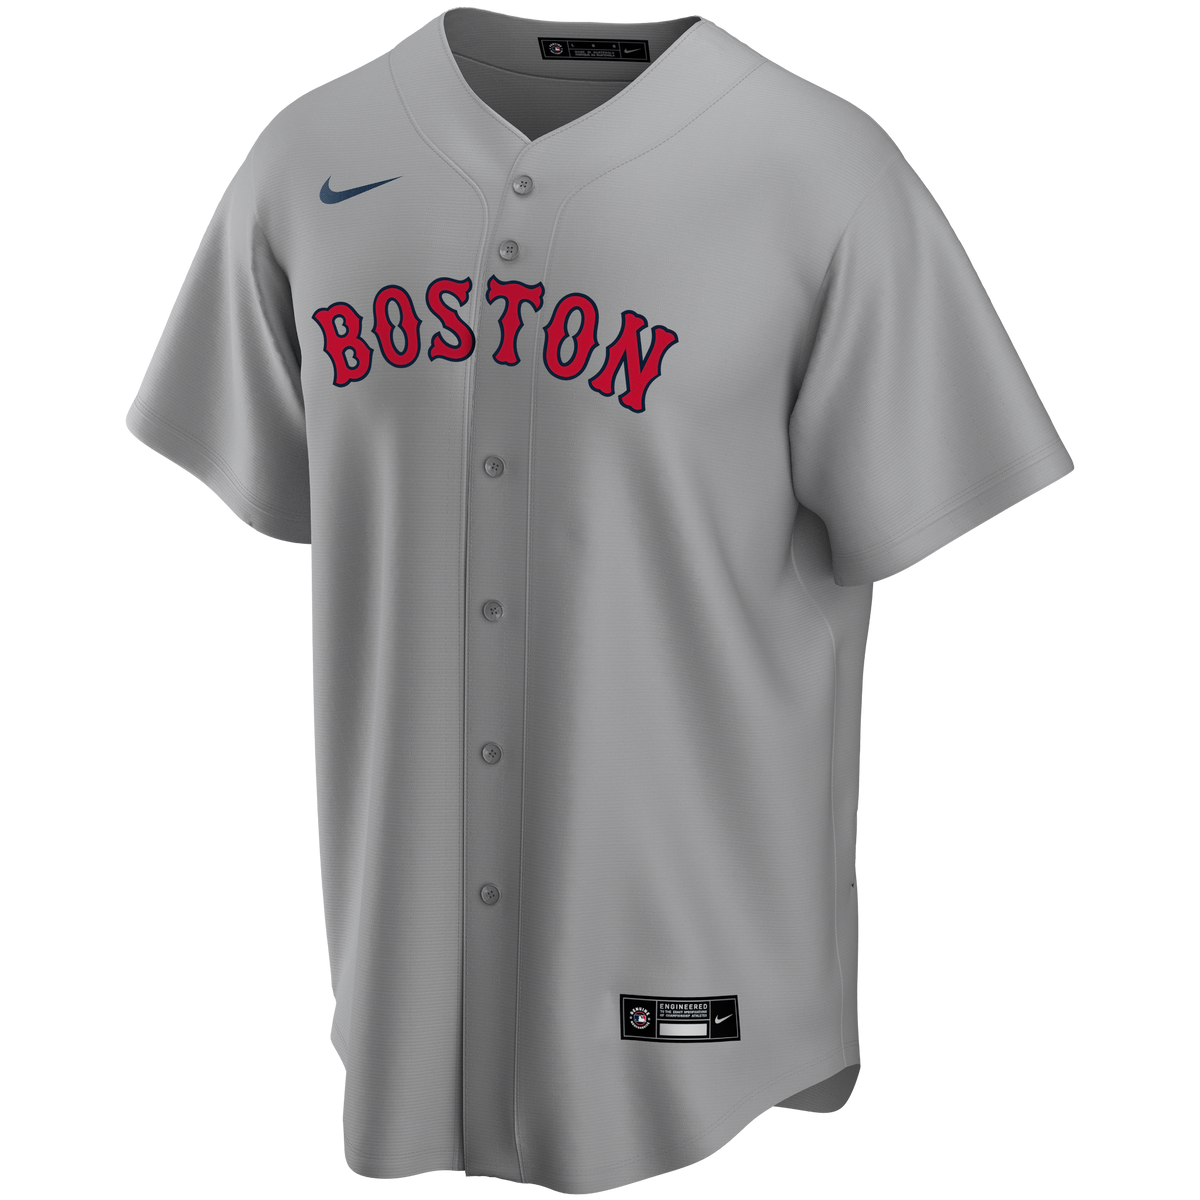 Majestic Boston Red Sox Jason Varitek #33 T-Shirt Jersey Youth Large